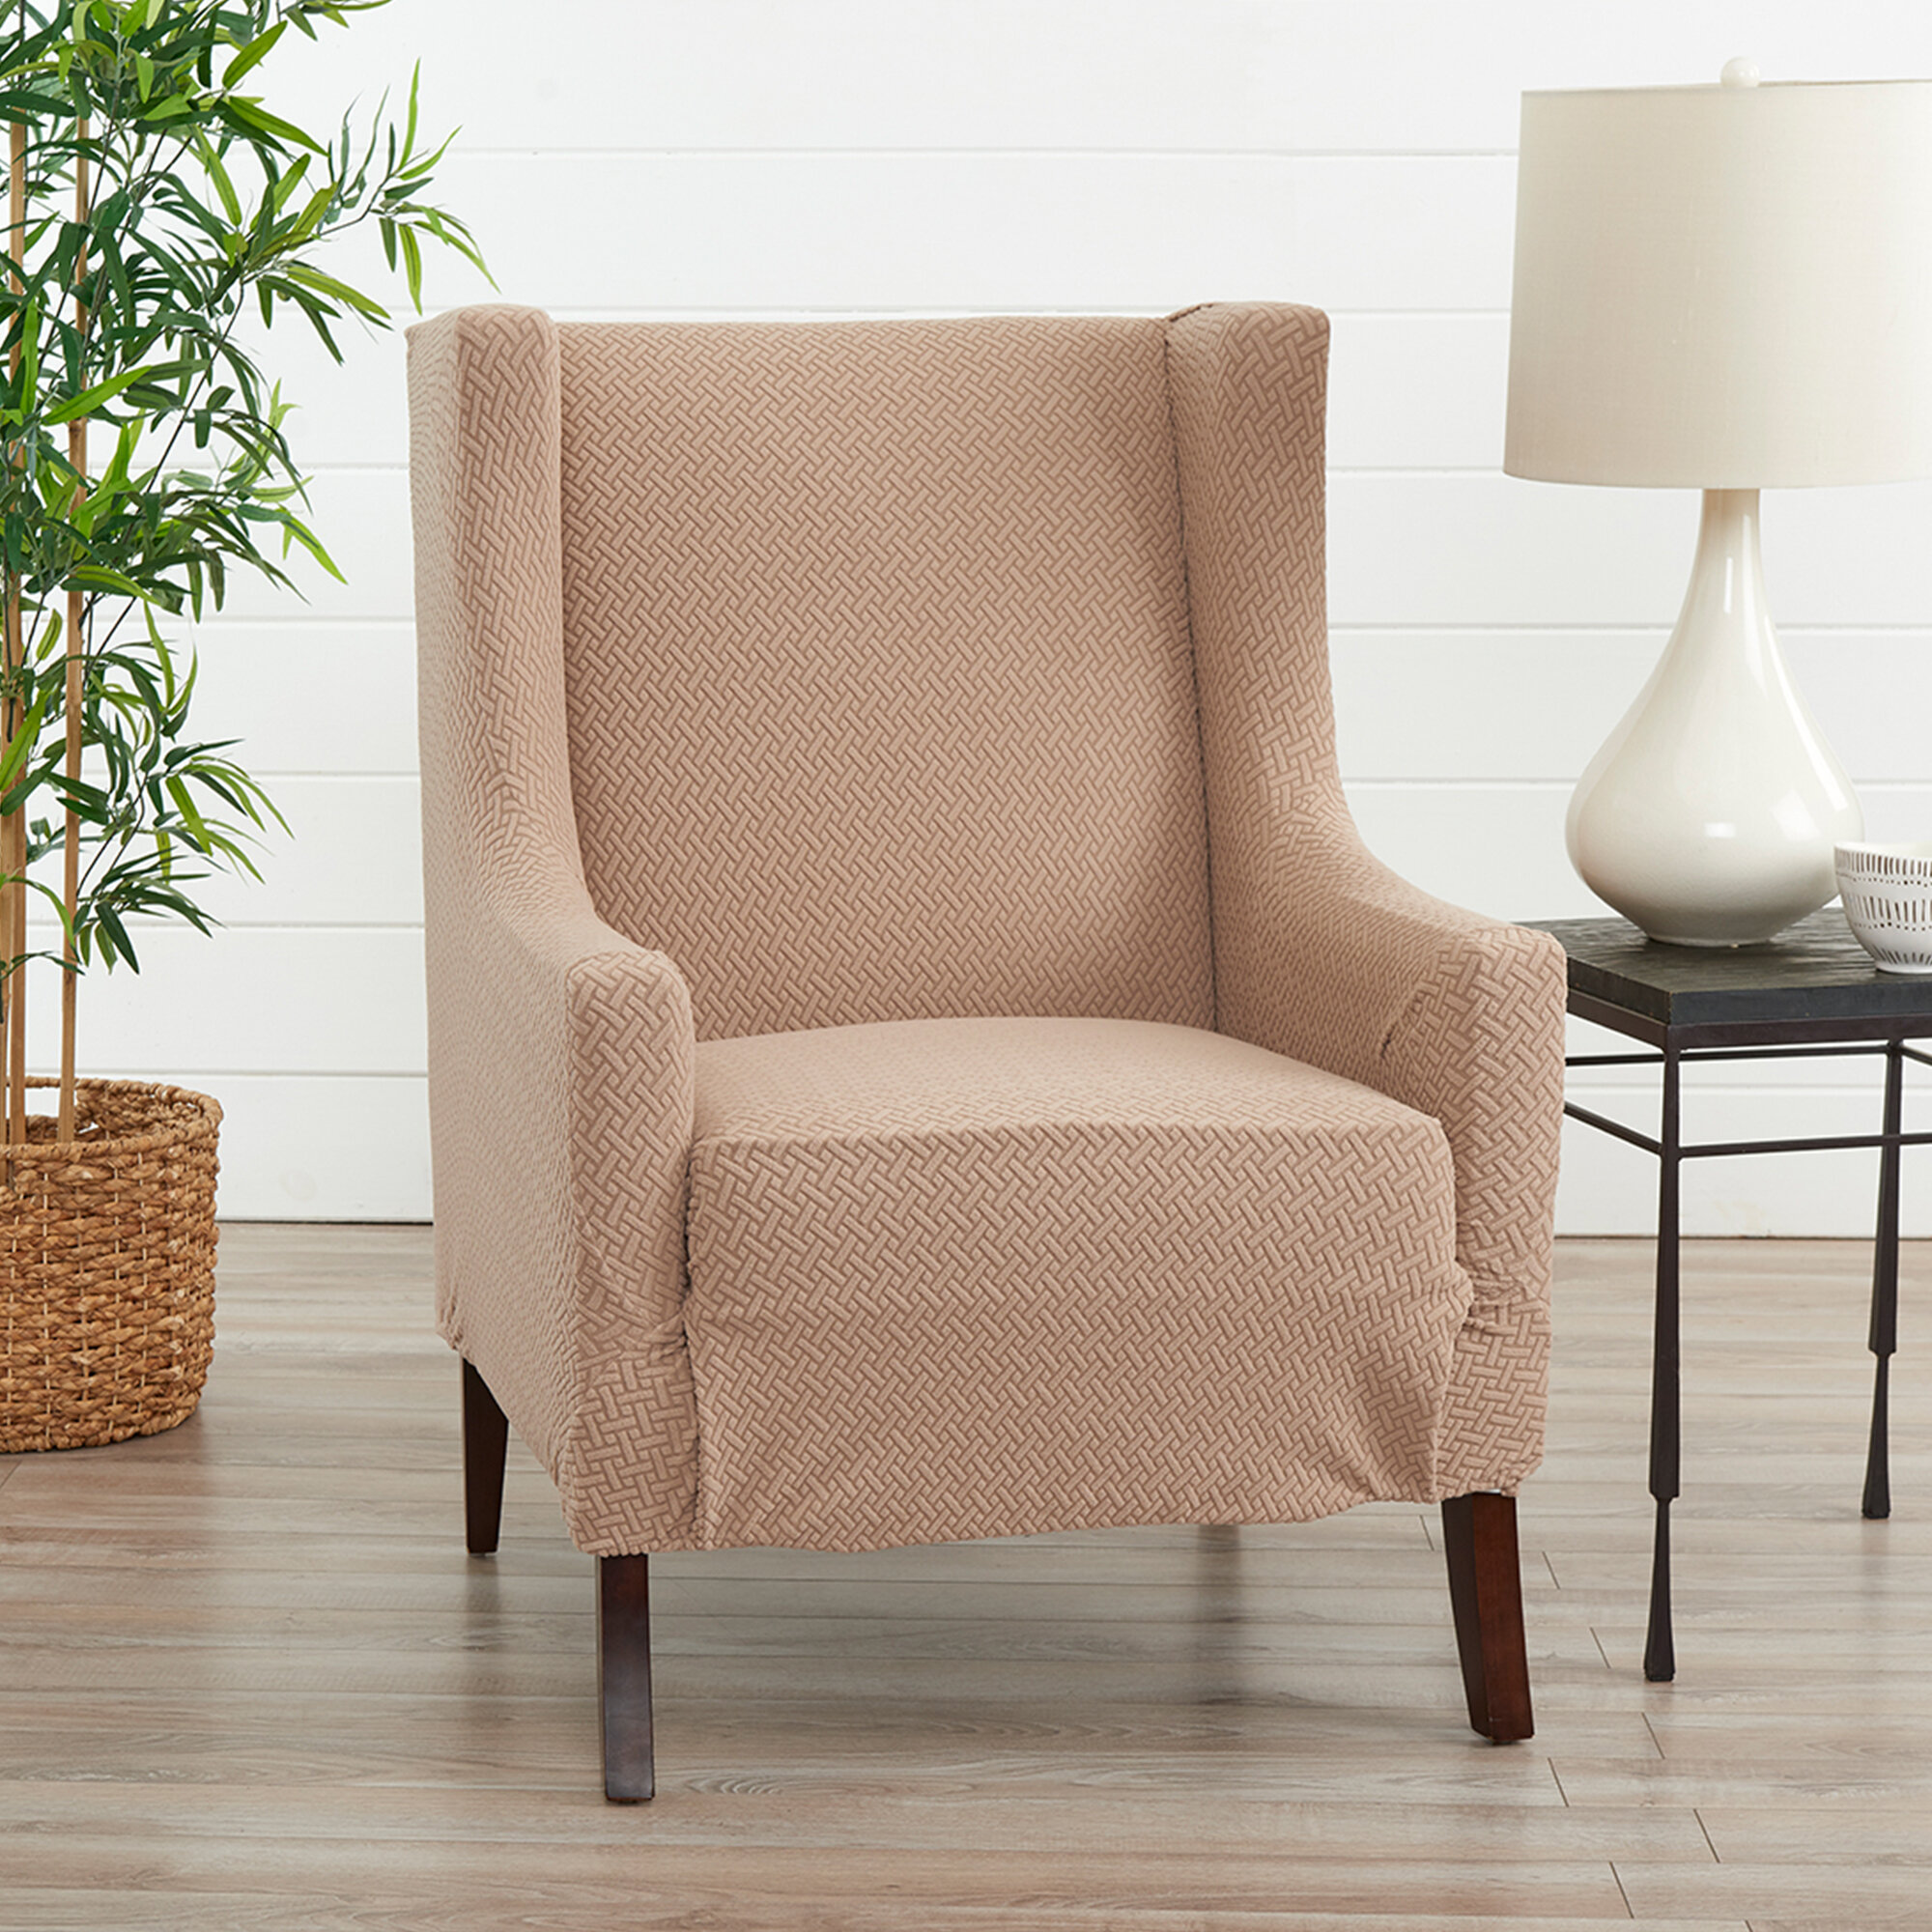 Ebern Designs Harlowe Wingback Box Cushion Chair Slipcover Reviews Wayfair